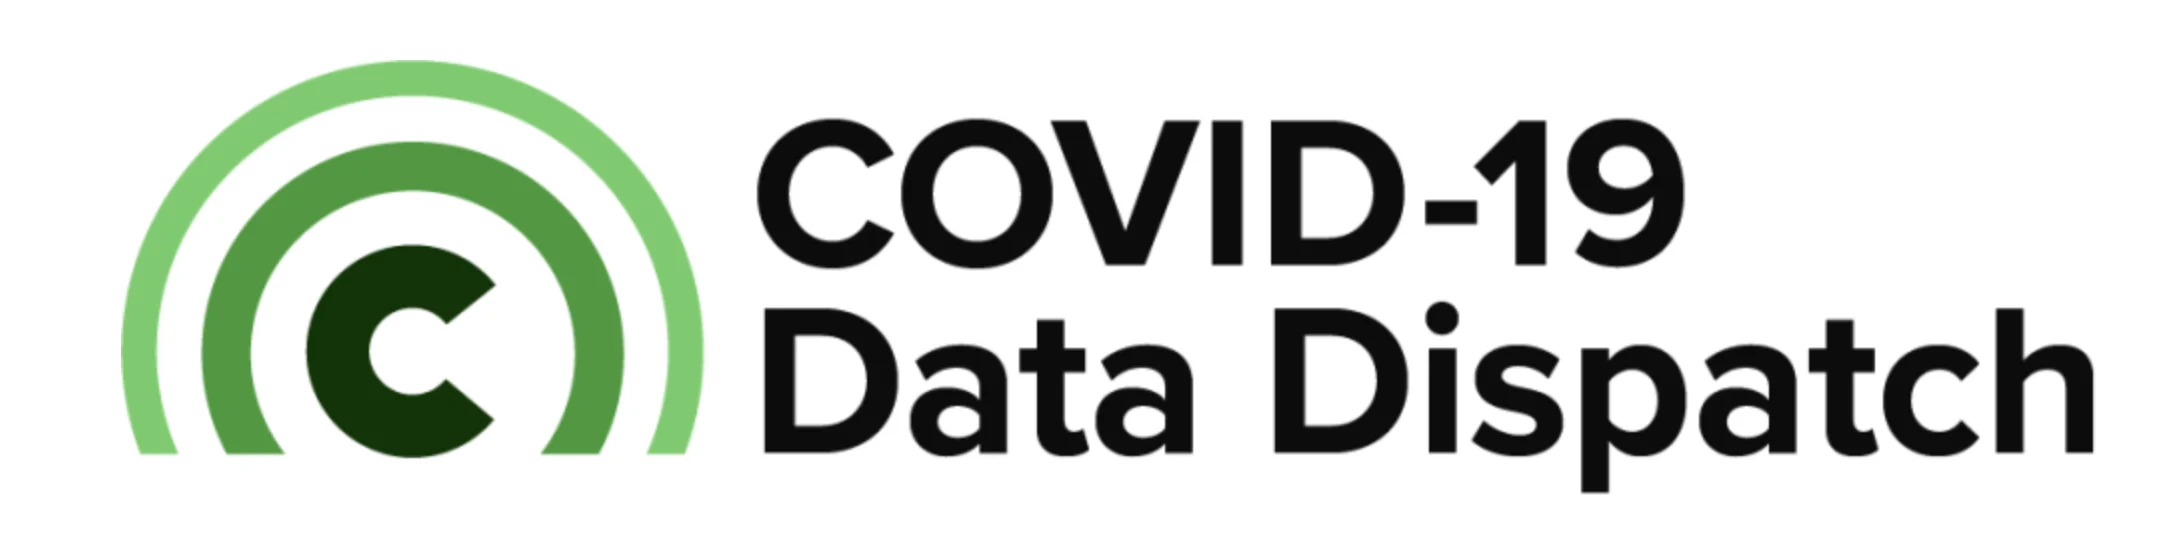 COVID-19 Data Dispatch logo